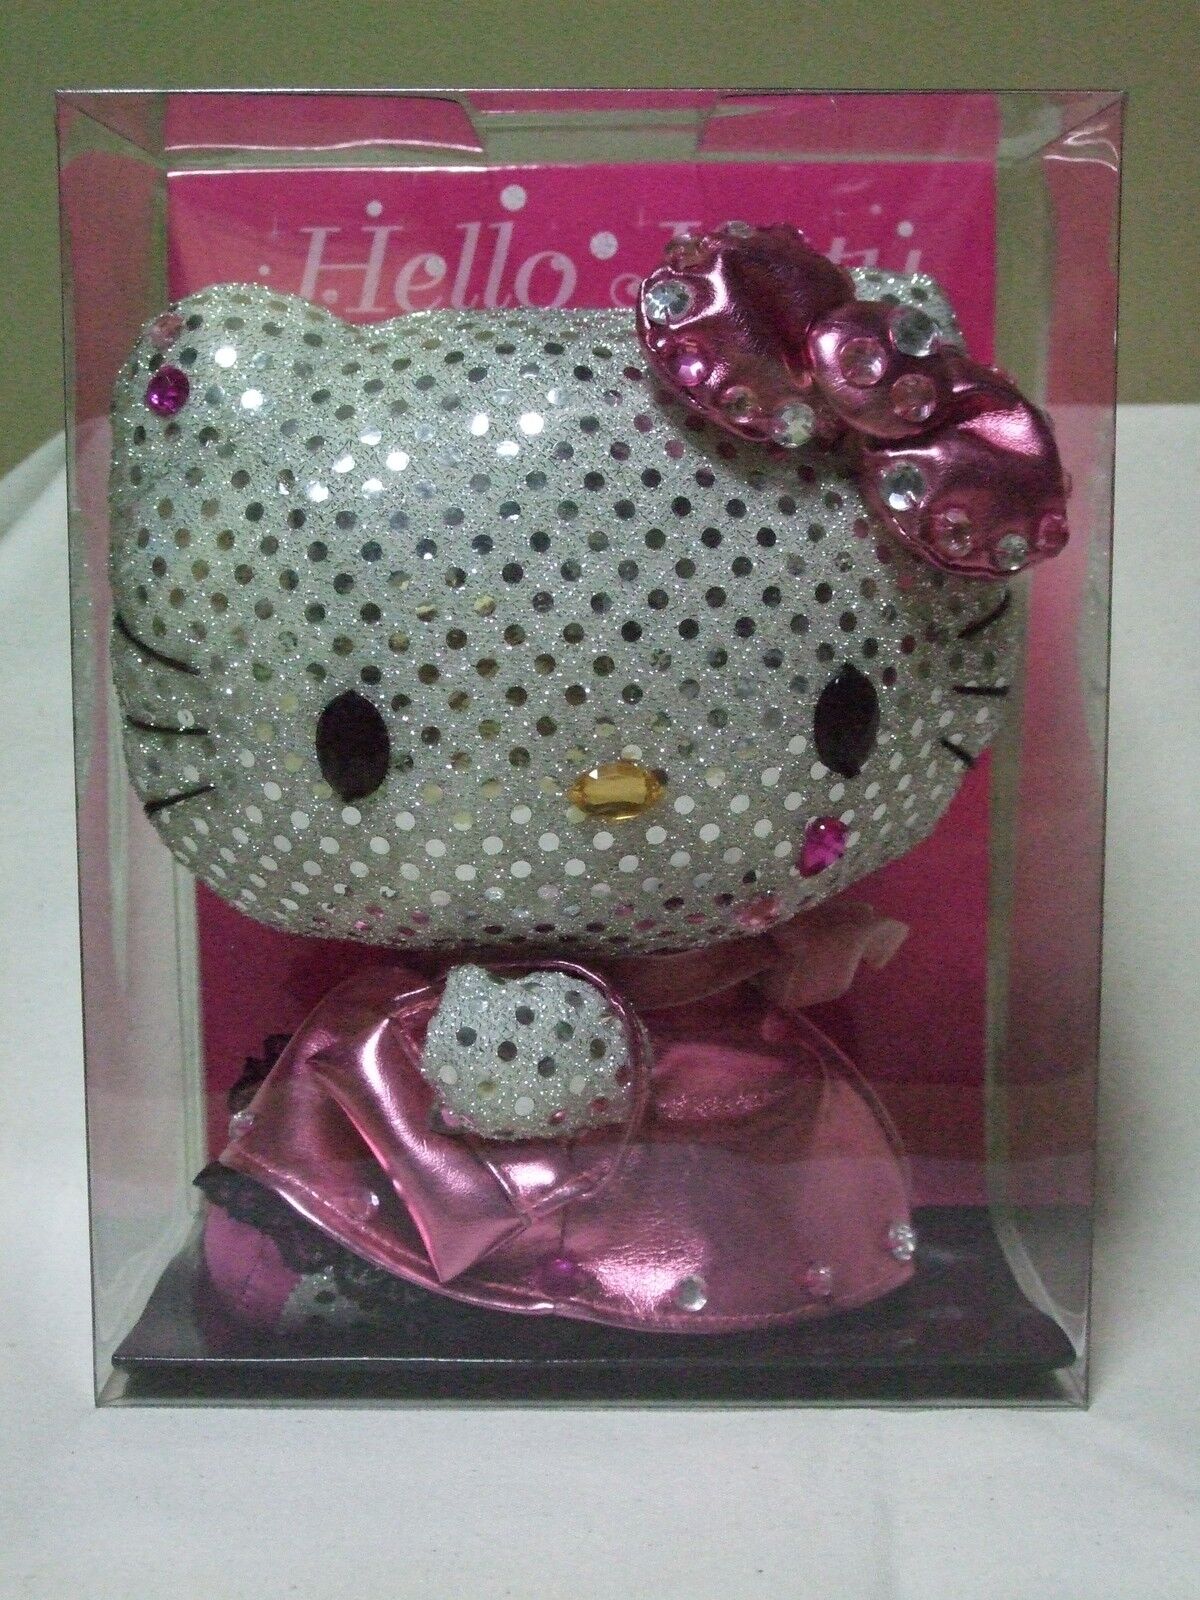 Hello Kitty KIRA-KIRA Decoration Kawaii Plush Doll Sanrio 2009 NIB